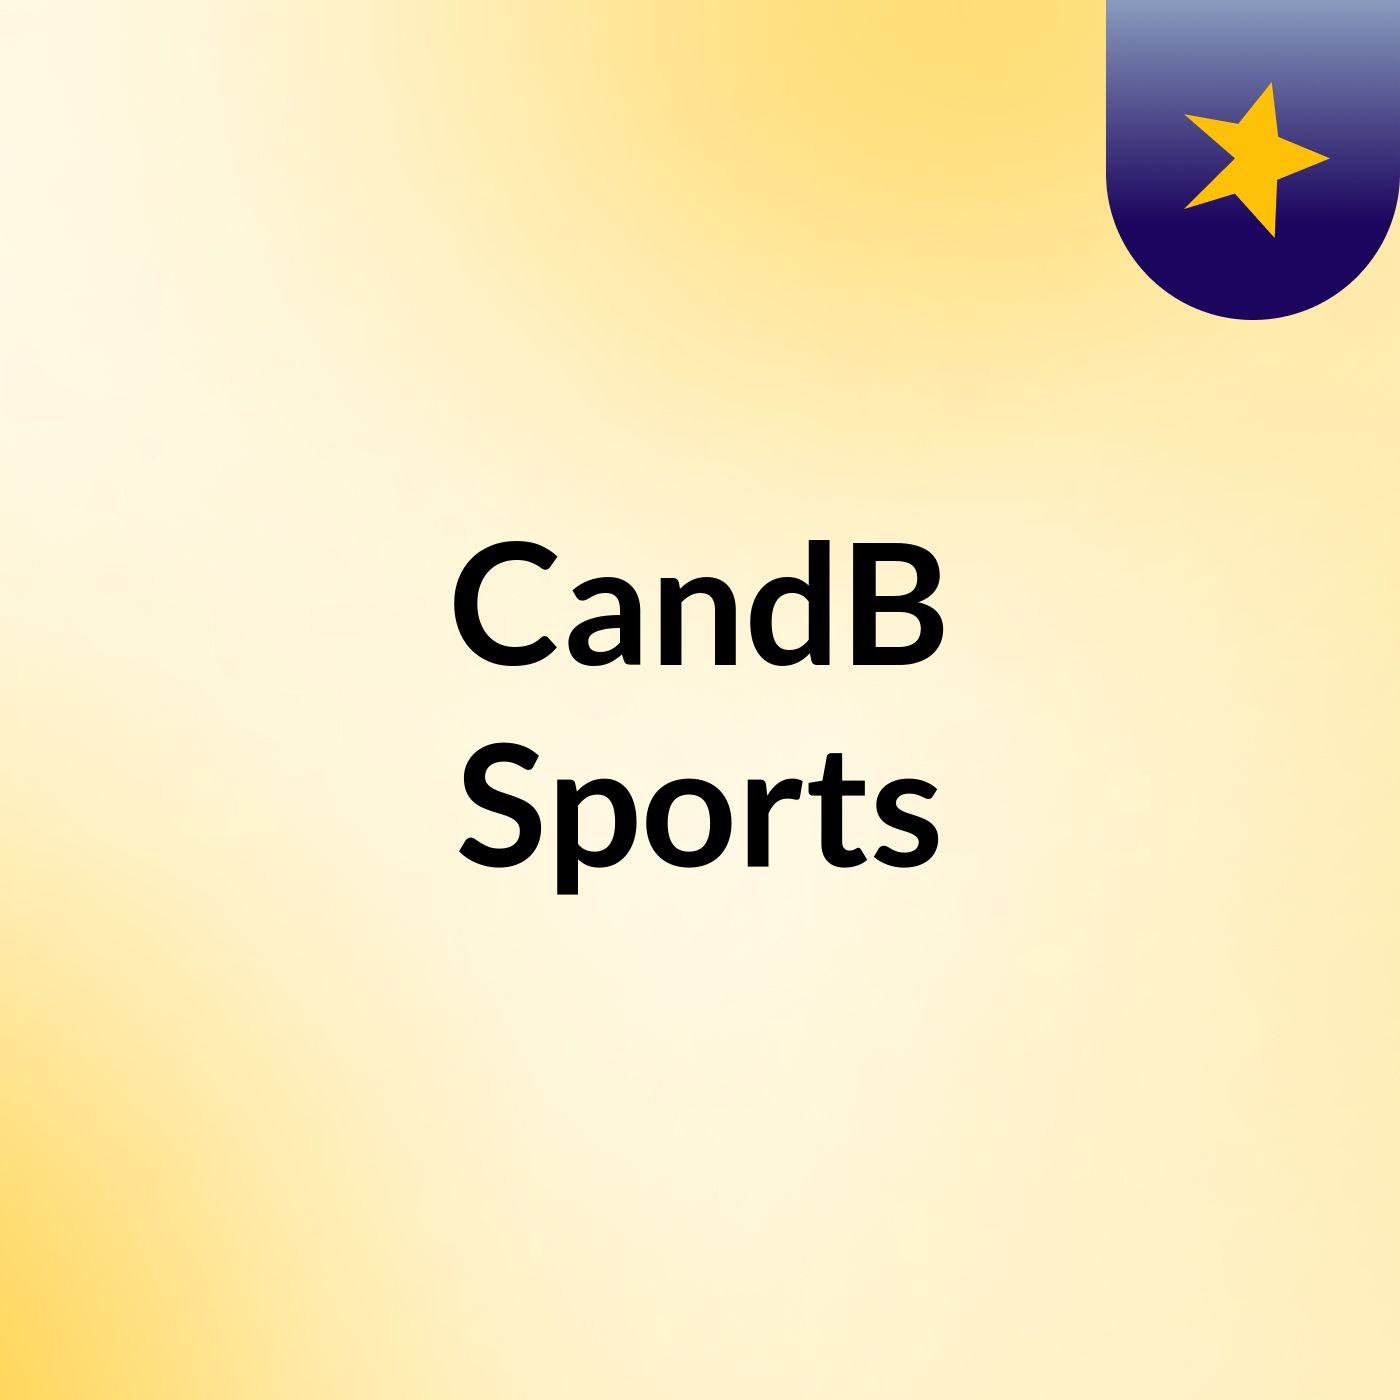 CandB Sports